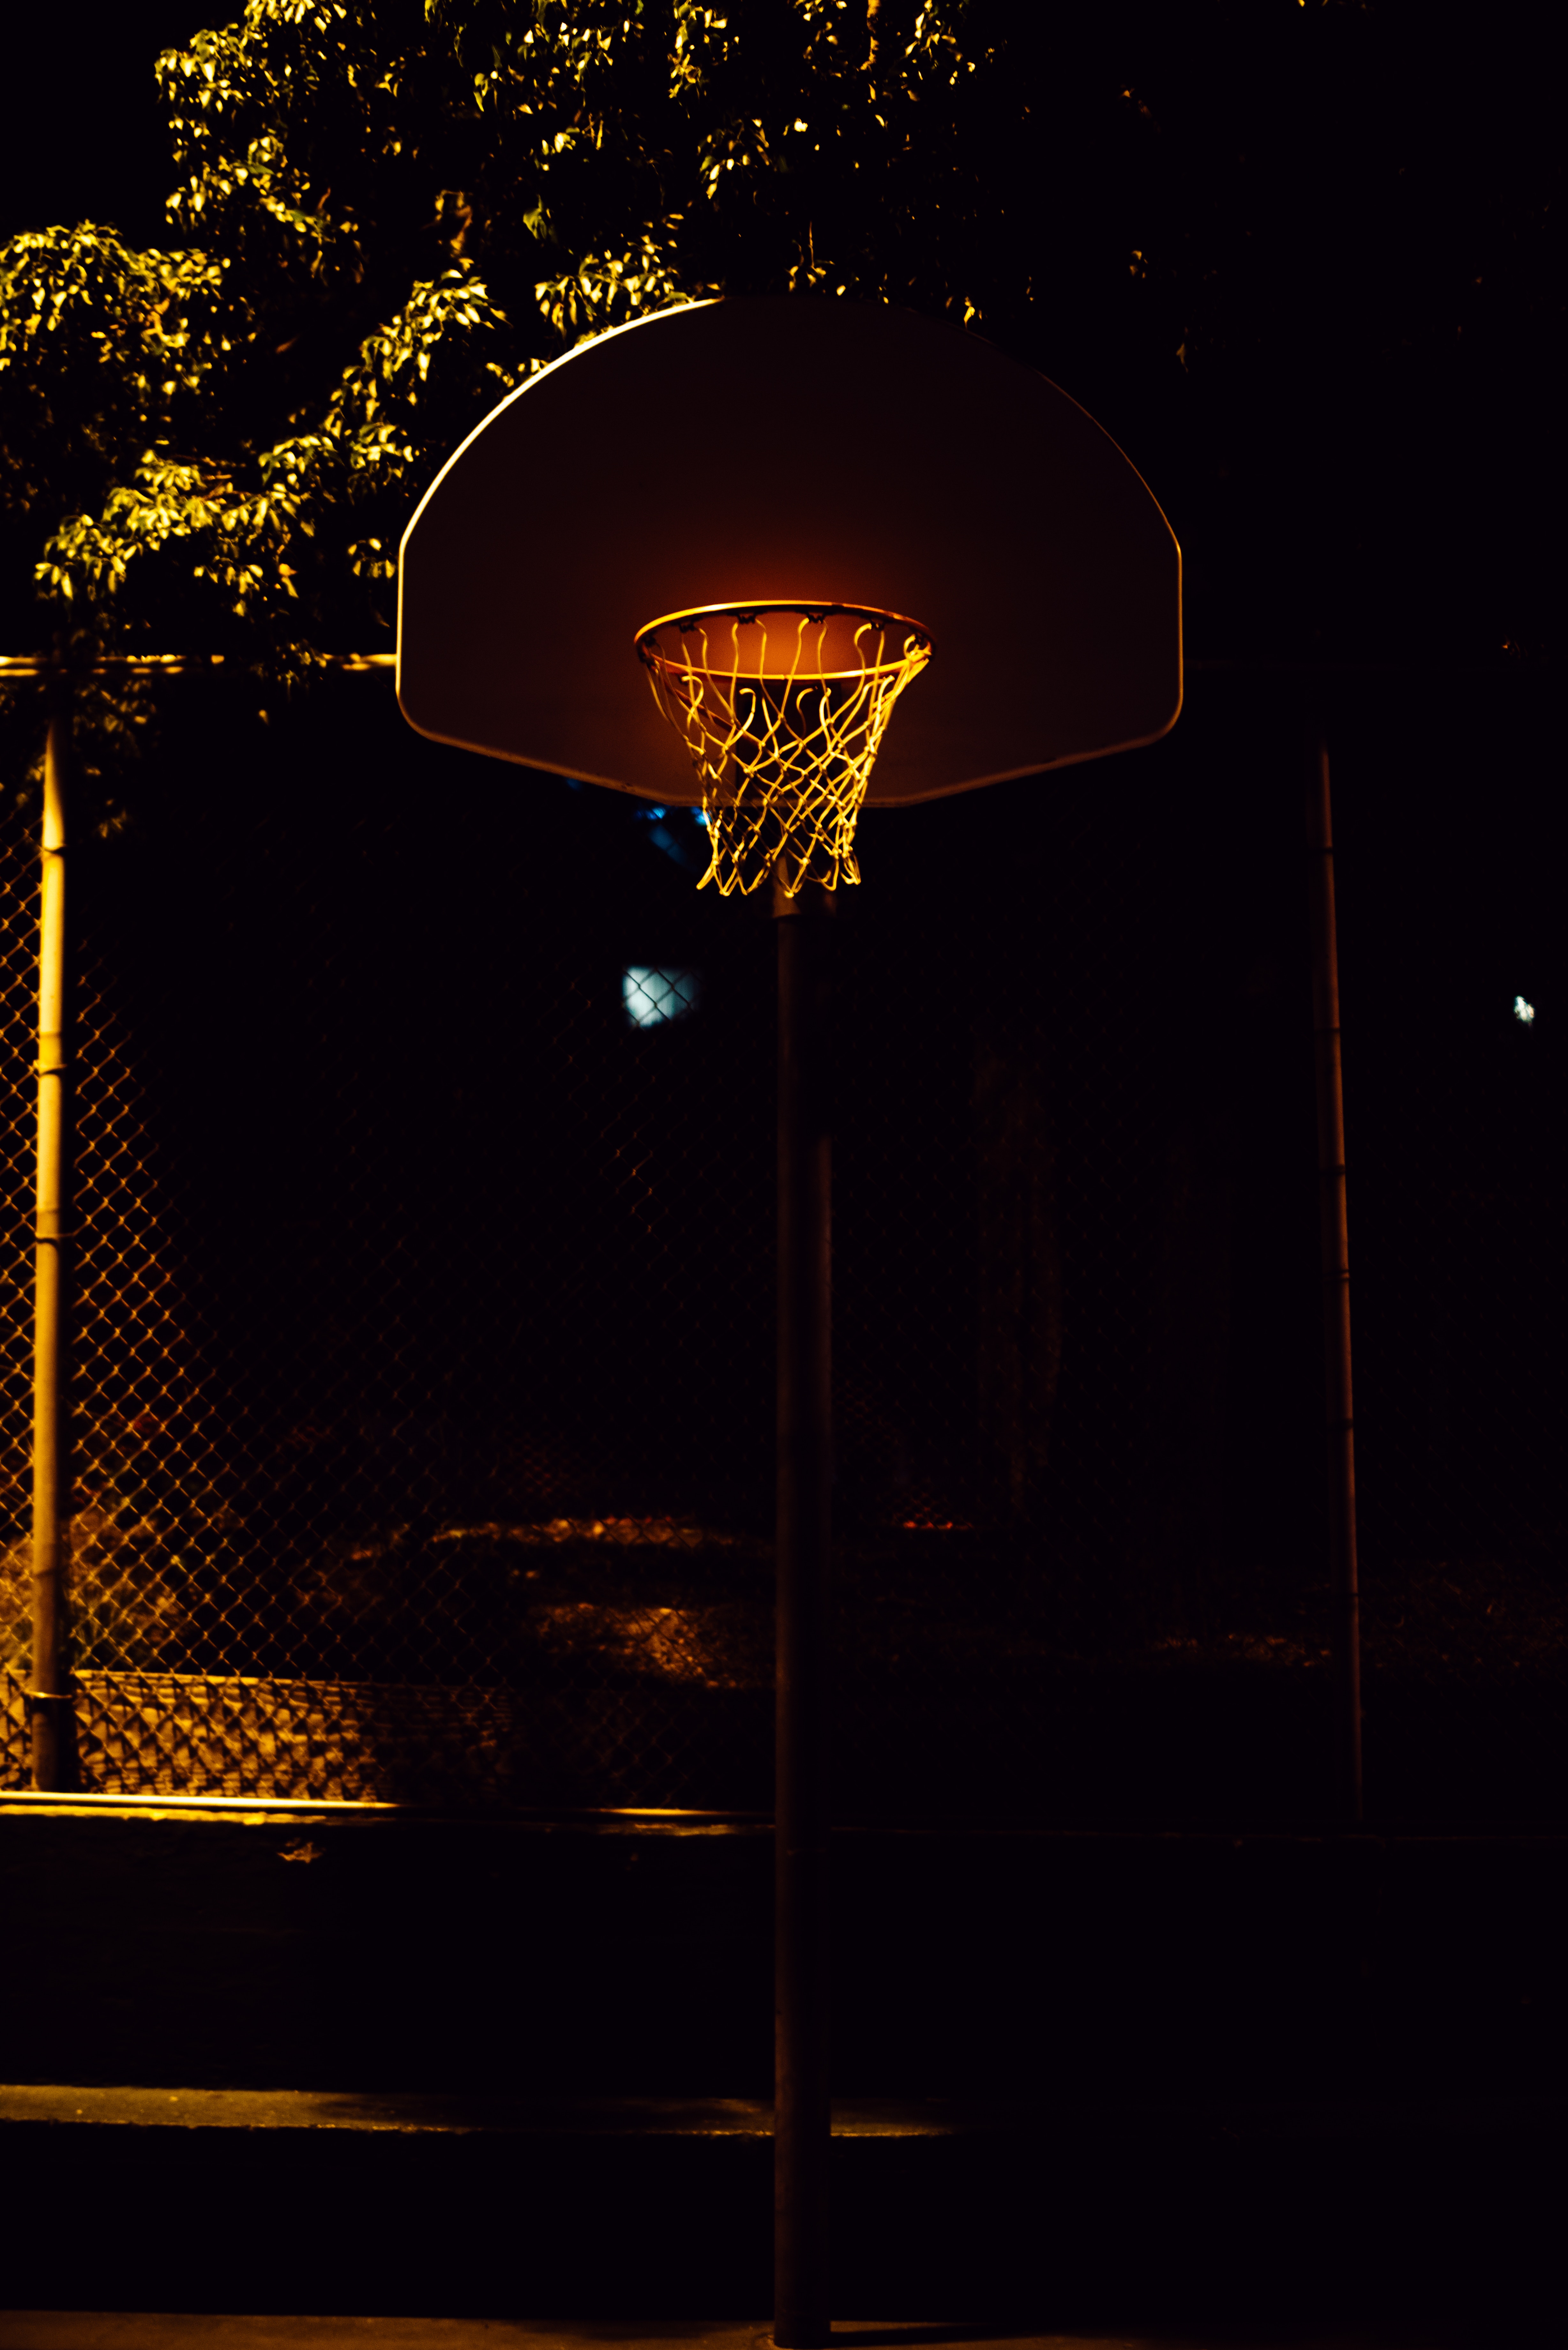 basketball, basketball net, basketball grid, basketball hoop, basketball ring, sports, night, shadows